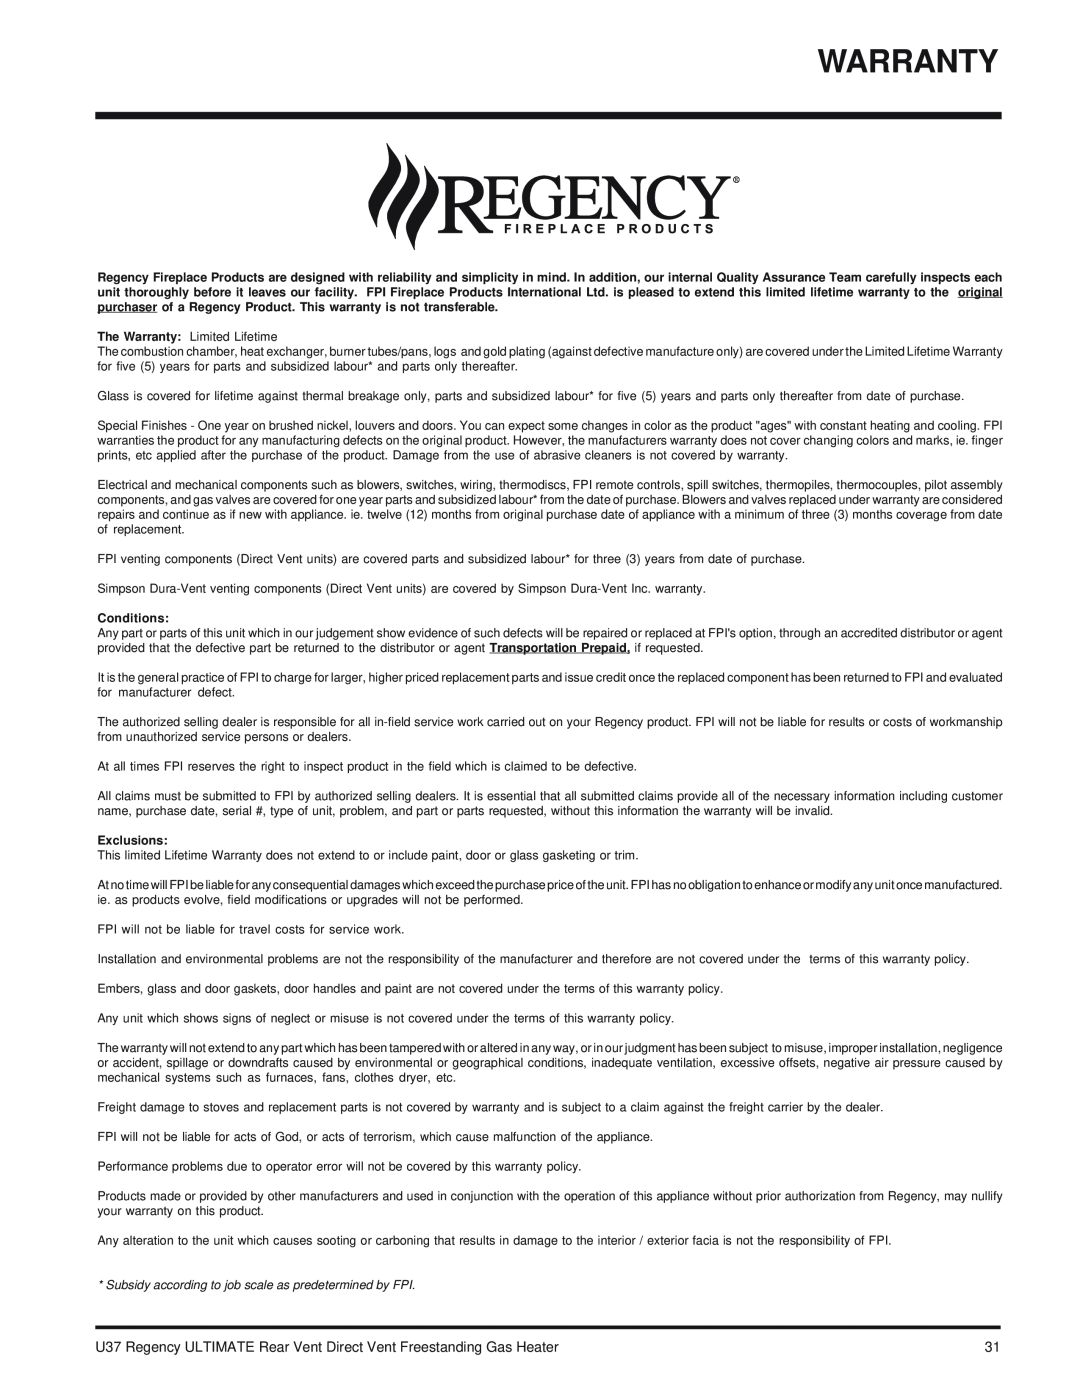 Regency U37-NG NATURAL GAS, U37-LP PROPANE installation manual Warranty, Conditions, Exclusions 